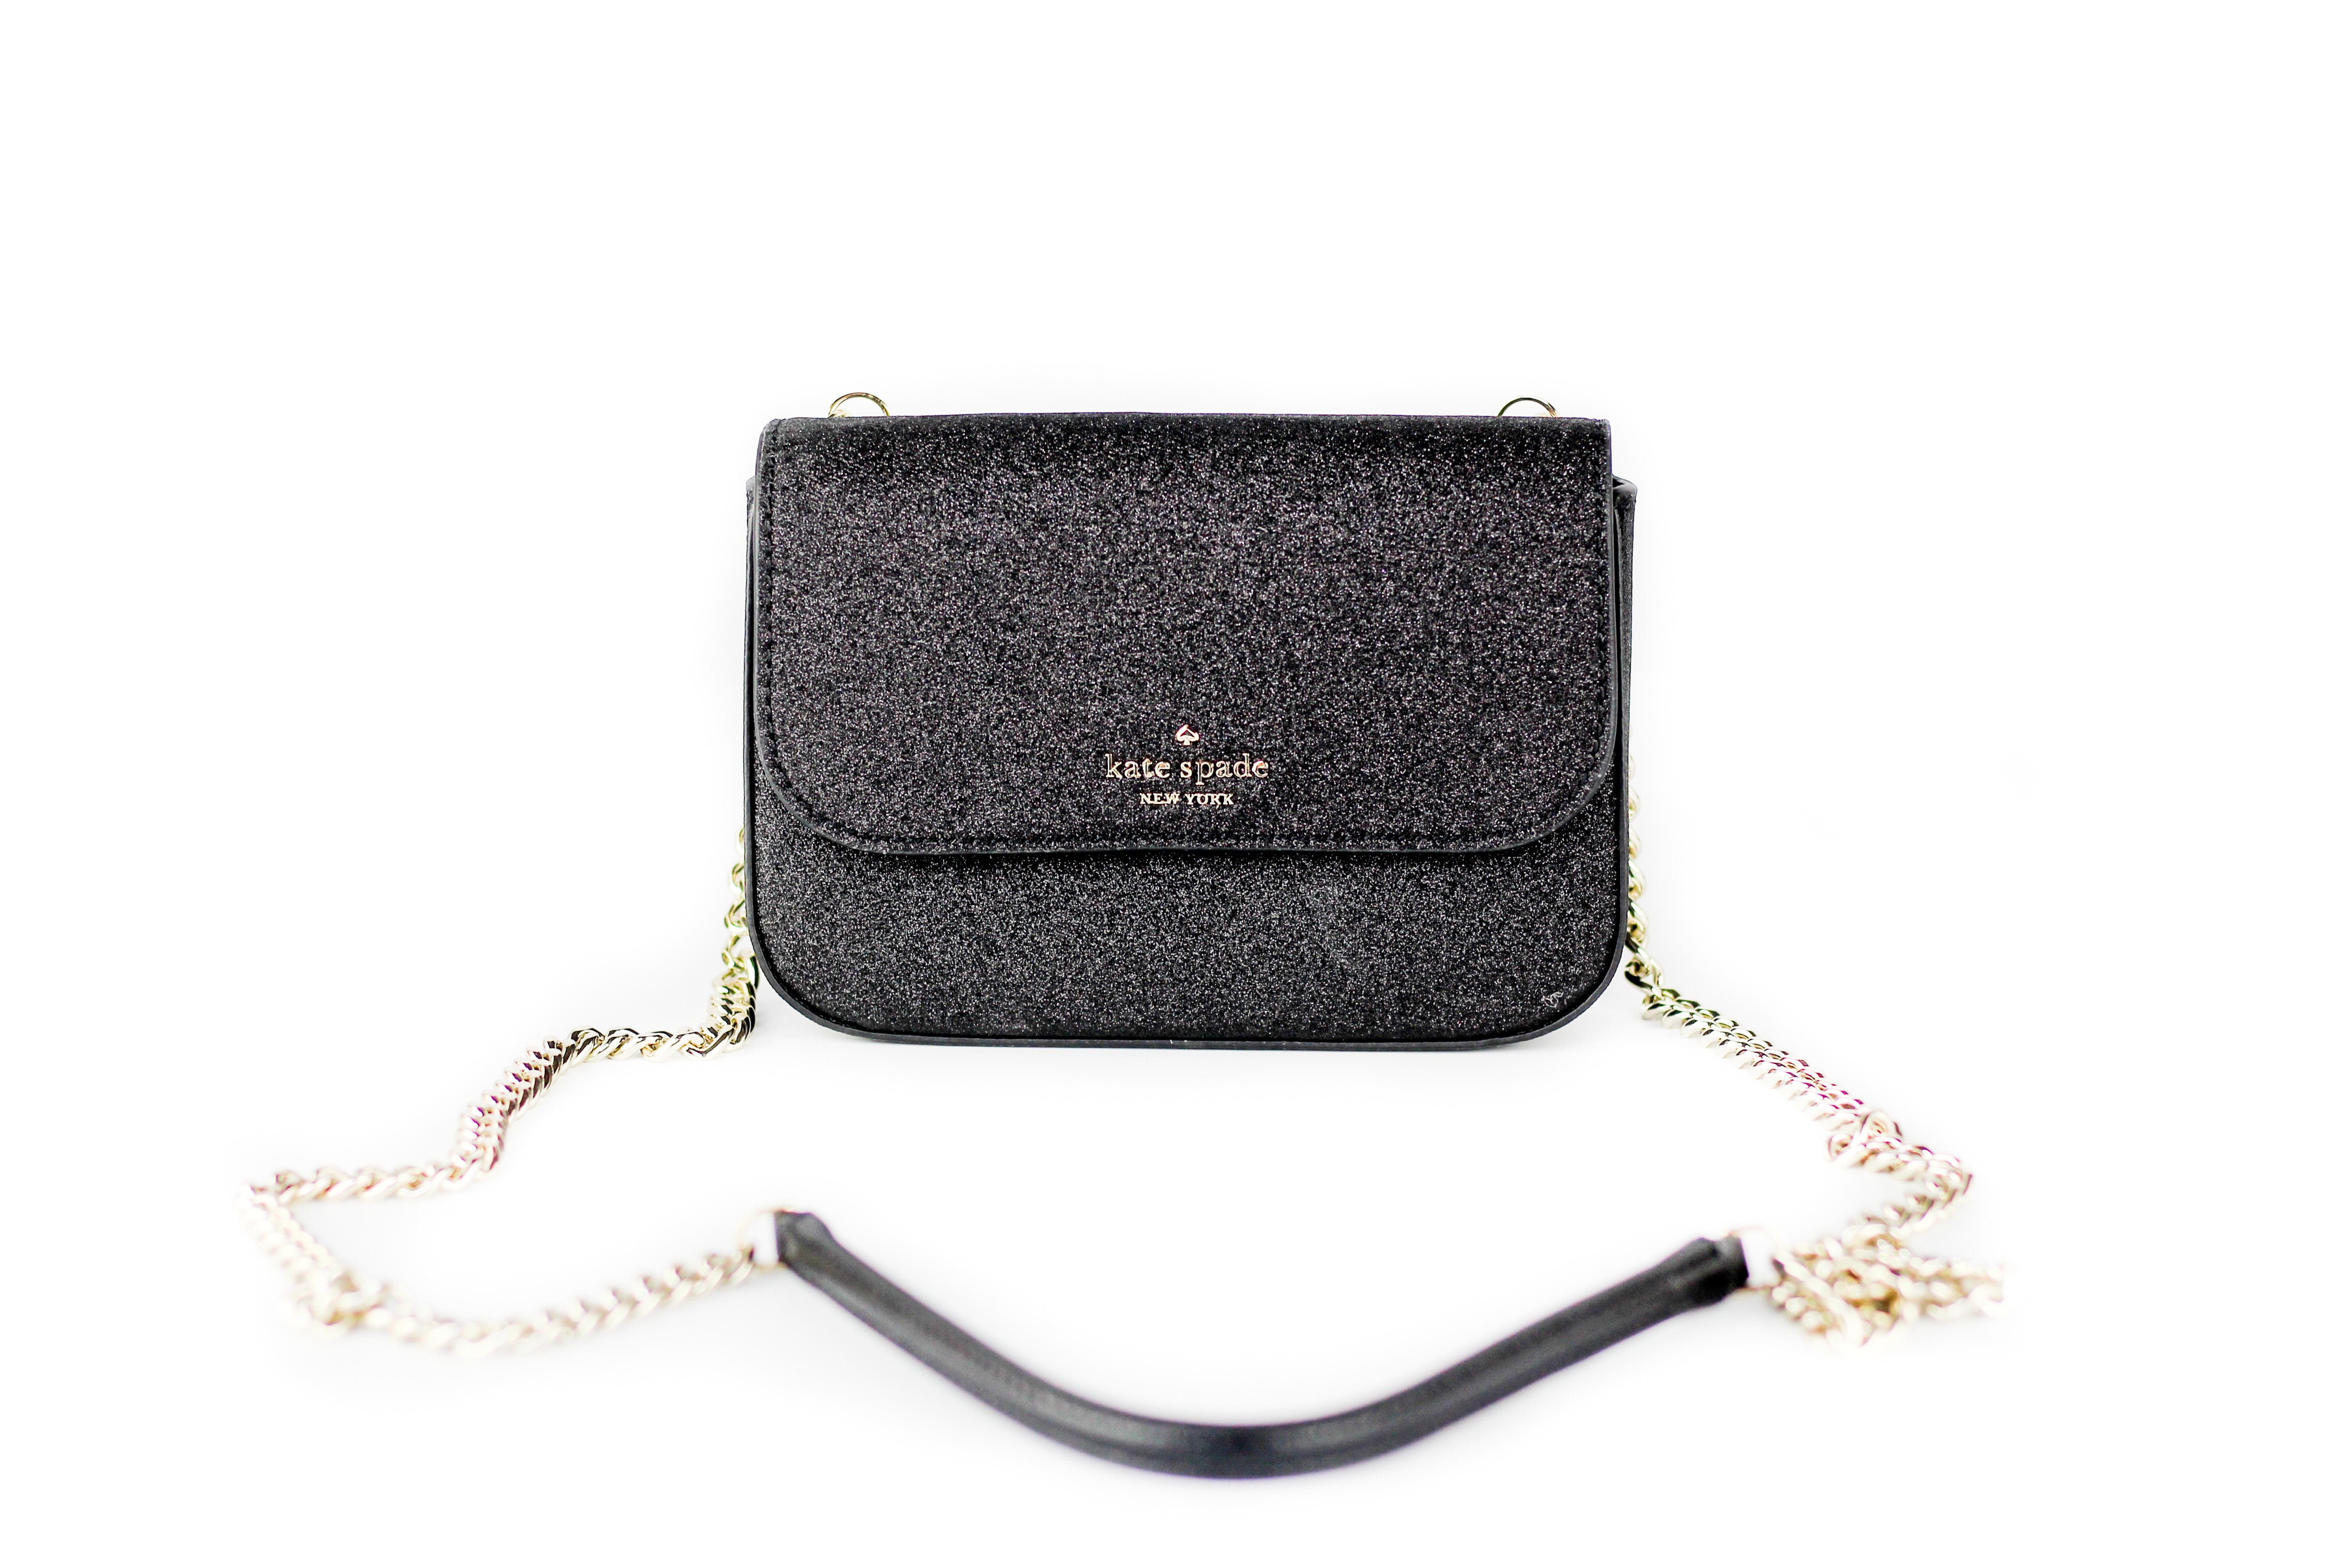 Kate Spade New York Jewelry Holder Travel Box Black Saffiano Leather :  Clothing, Shoes & Jewelry - Amazon.com